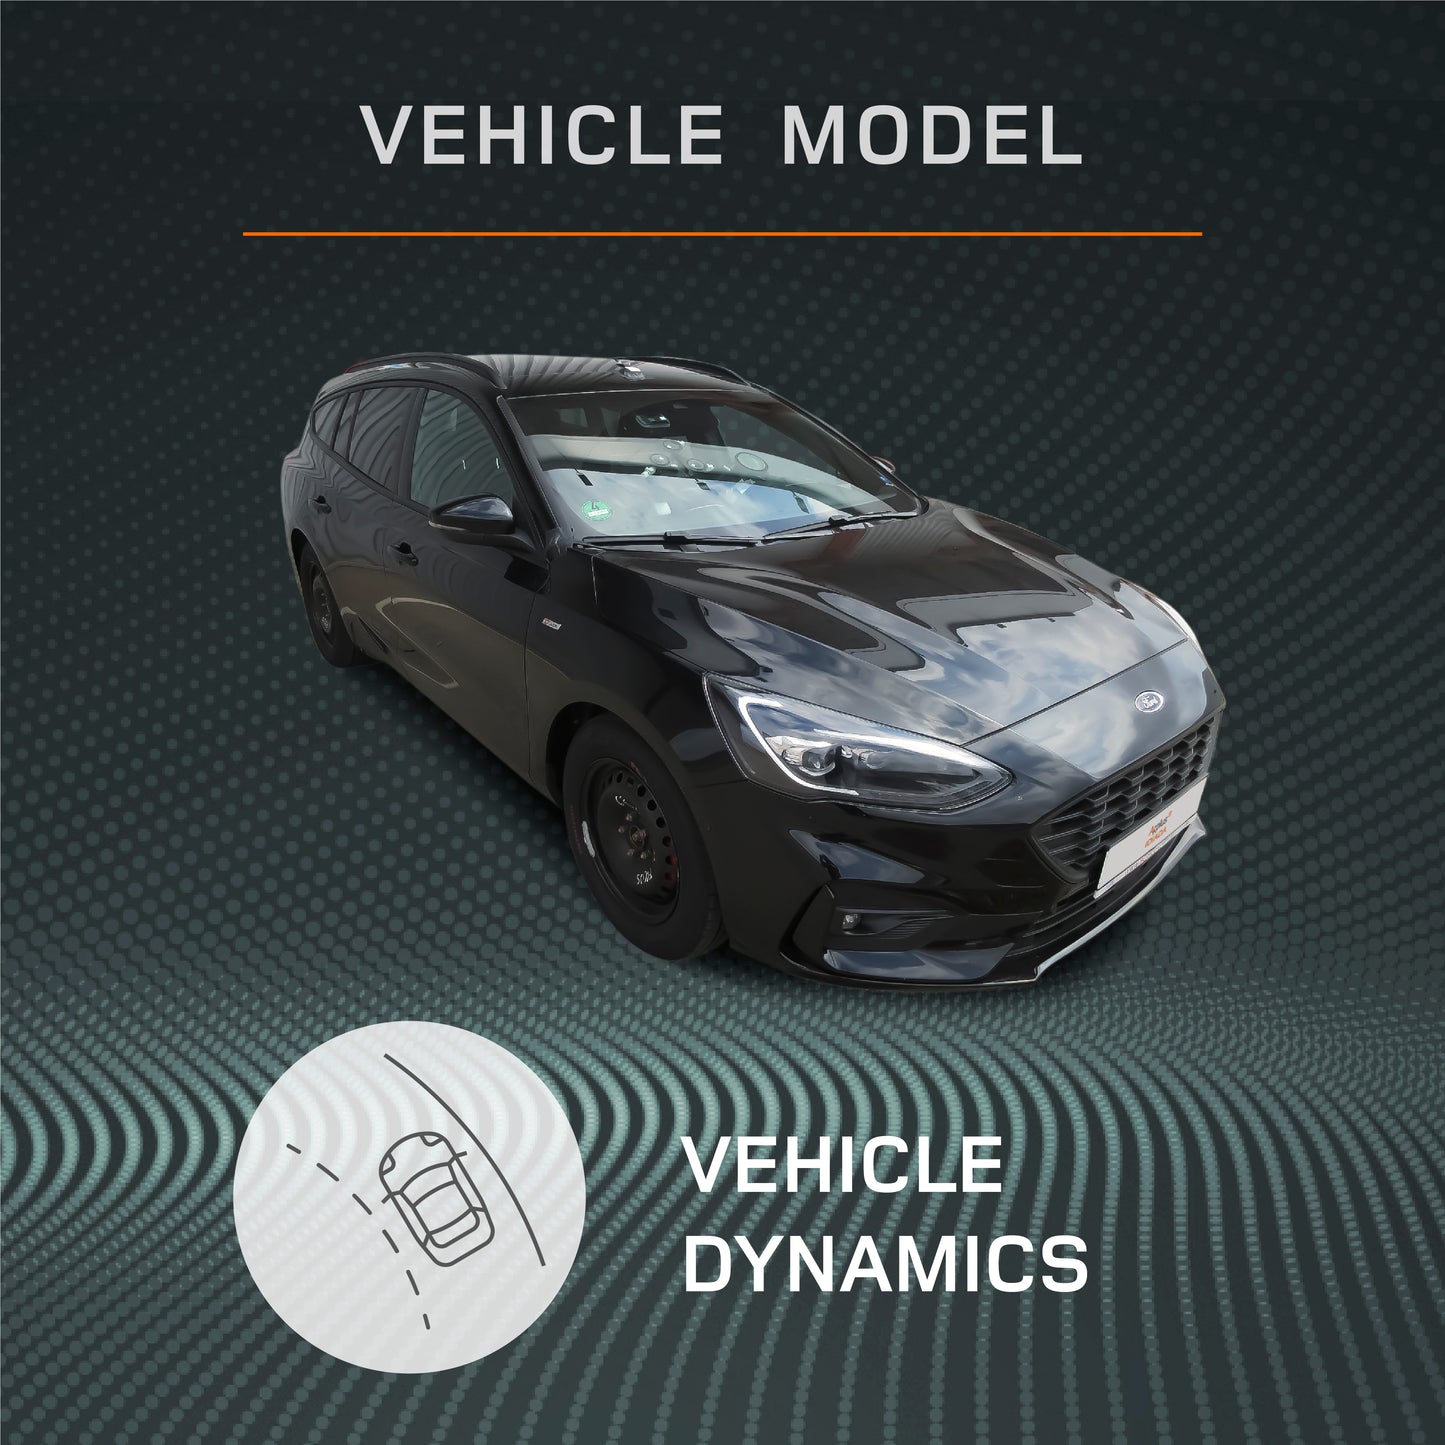 Ford Focus vehicle dynamics model